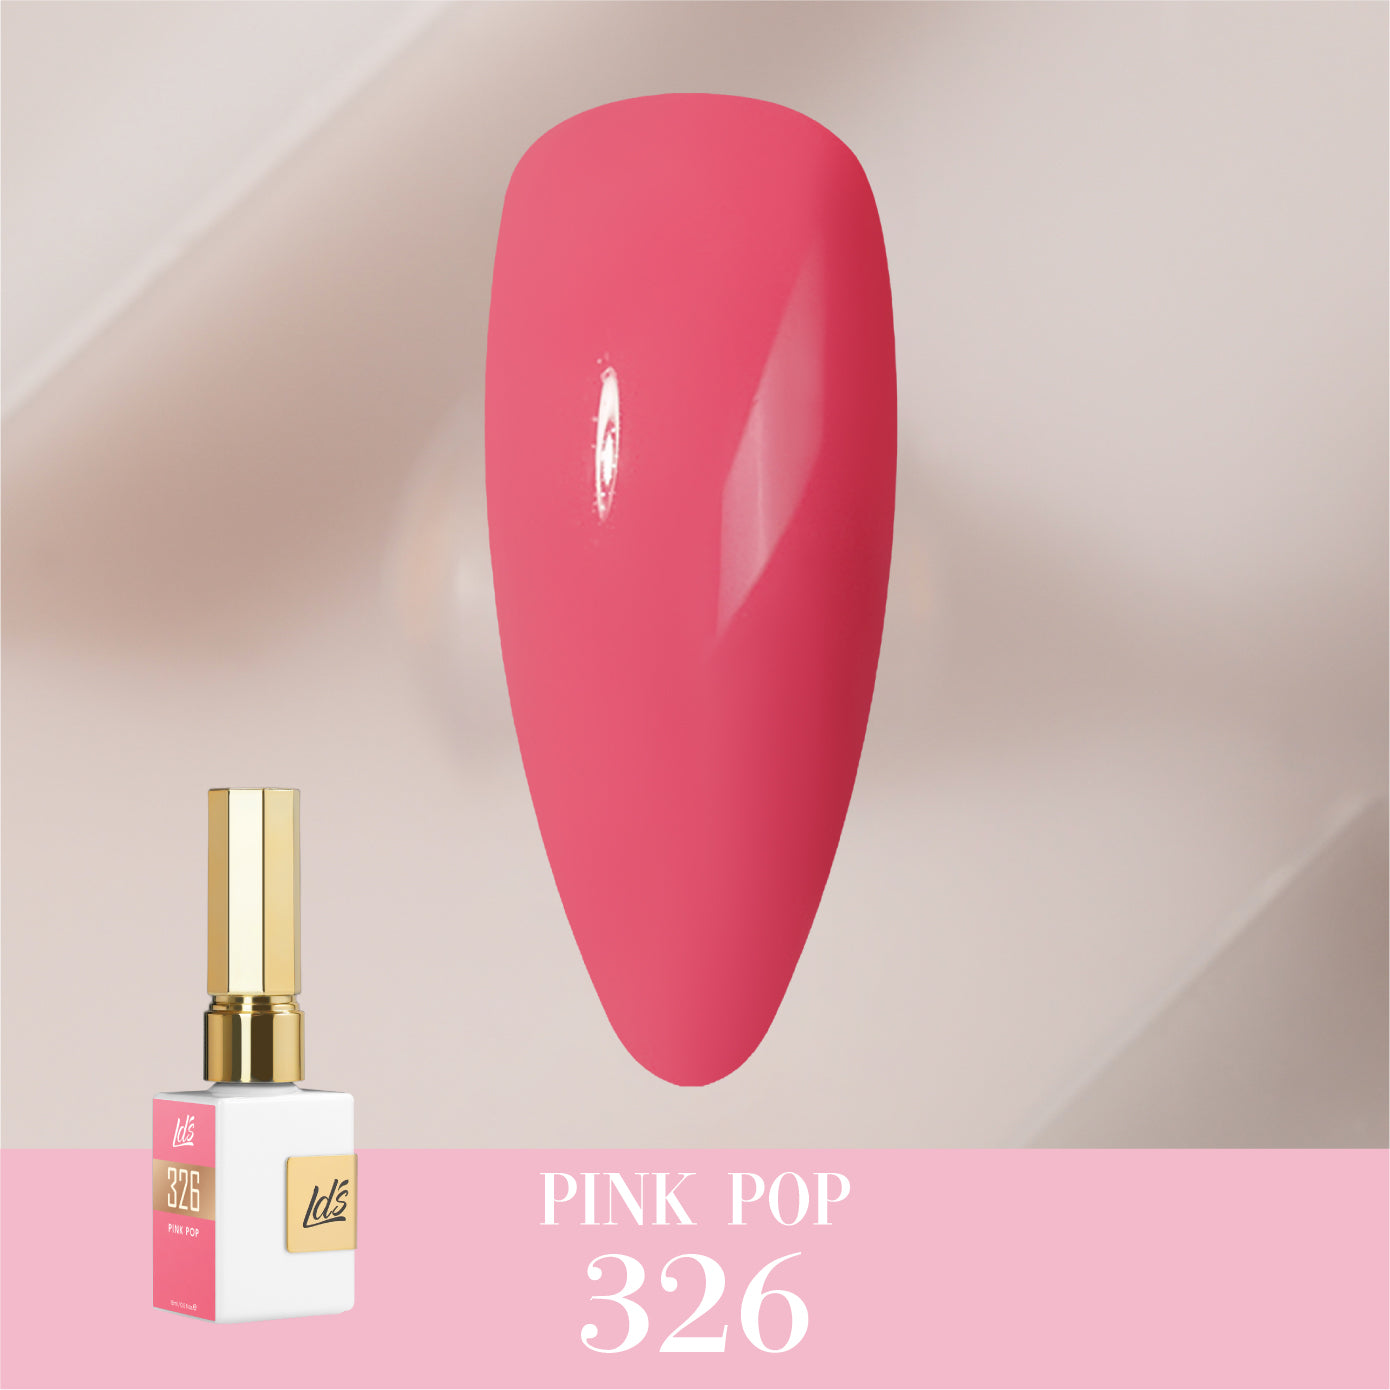 LDS Color Craze Collection - 326 Pink Pop - Gel Polish 0.5oz